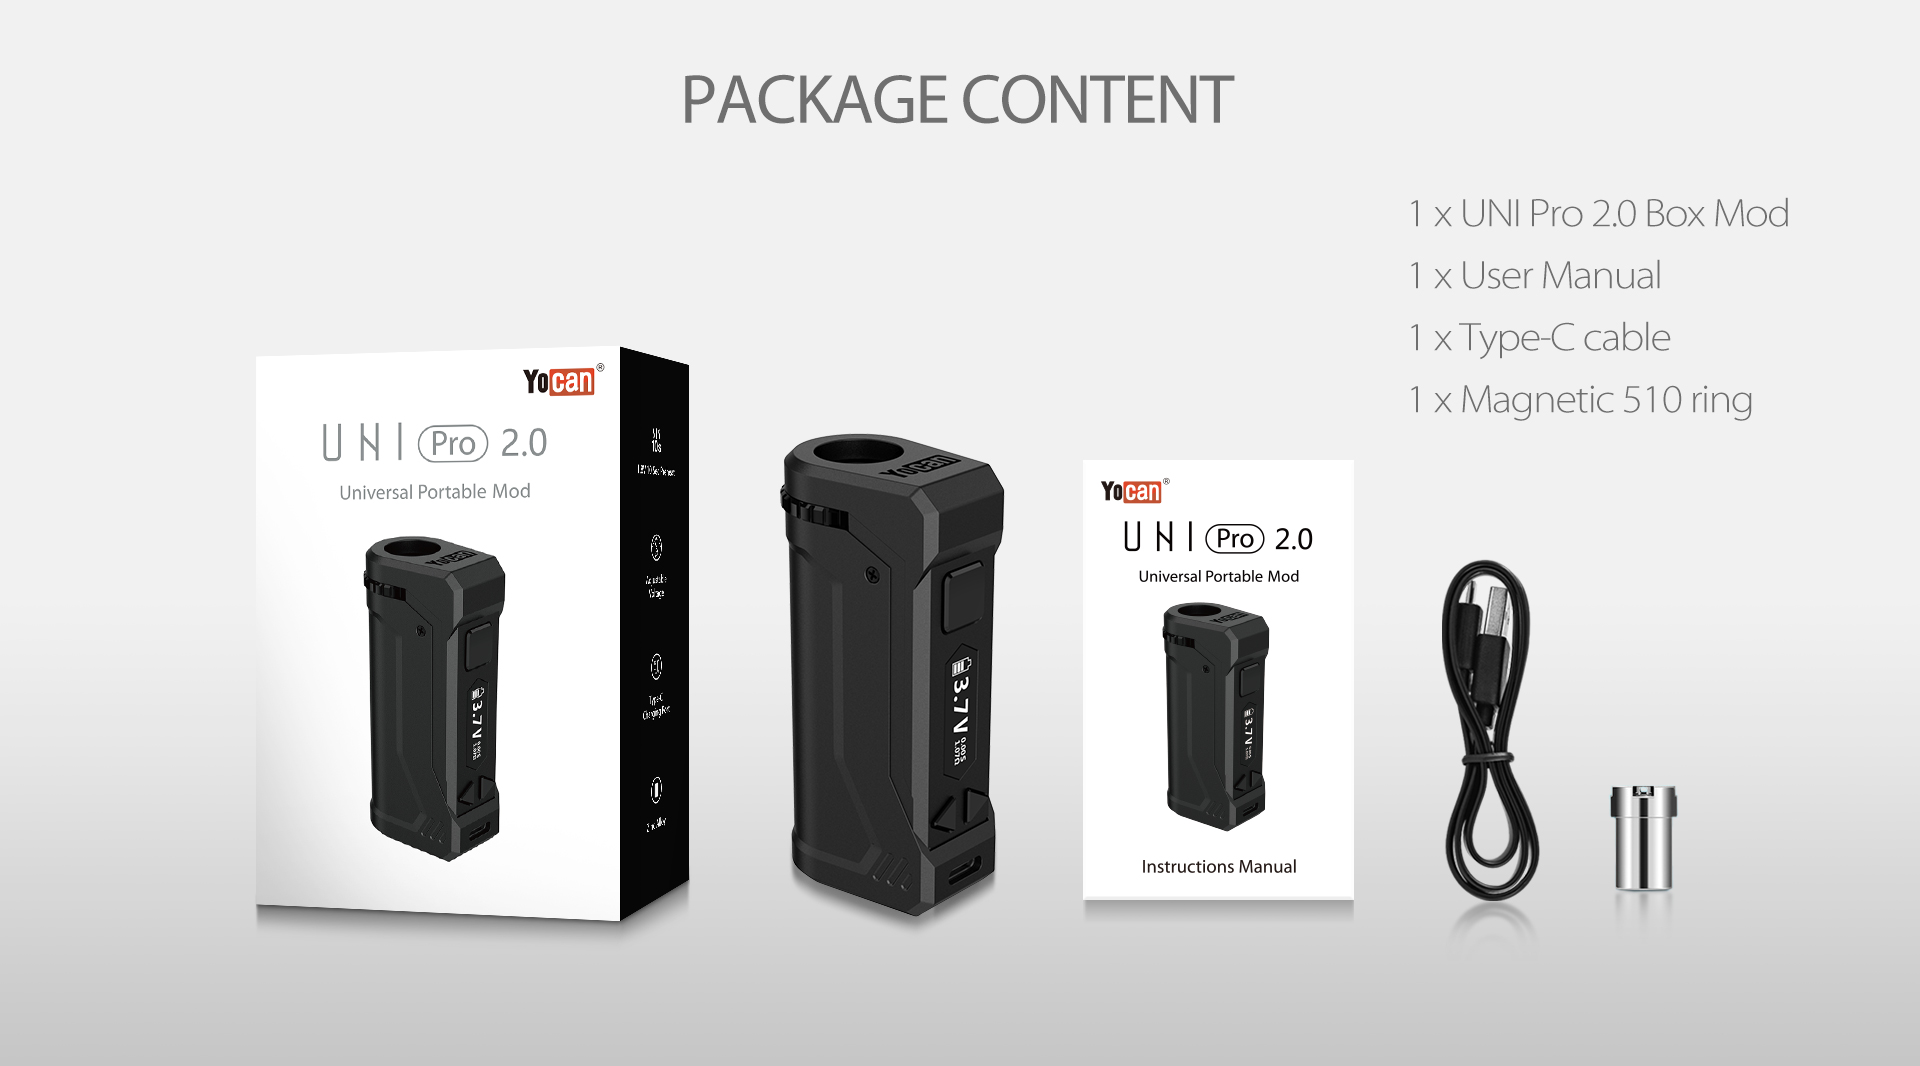 Yocan UNI Pro 2.0 Box Mod package content